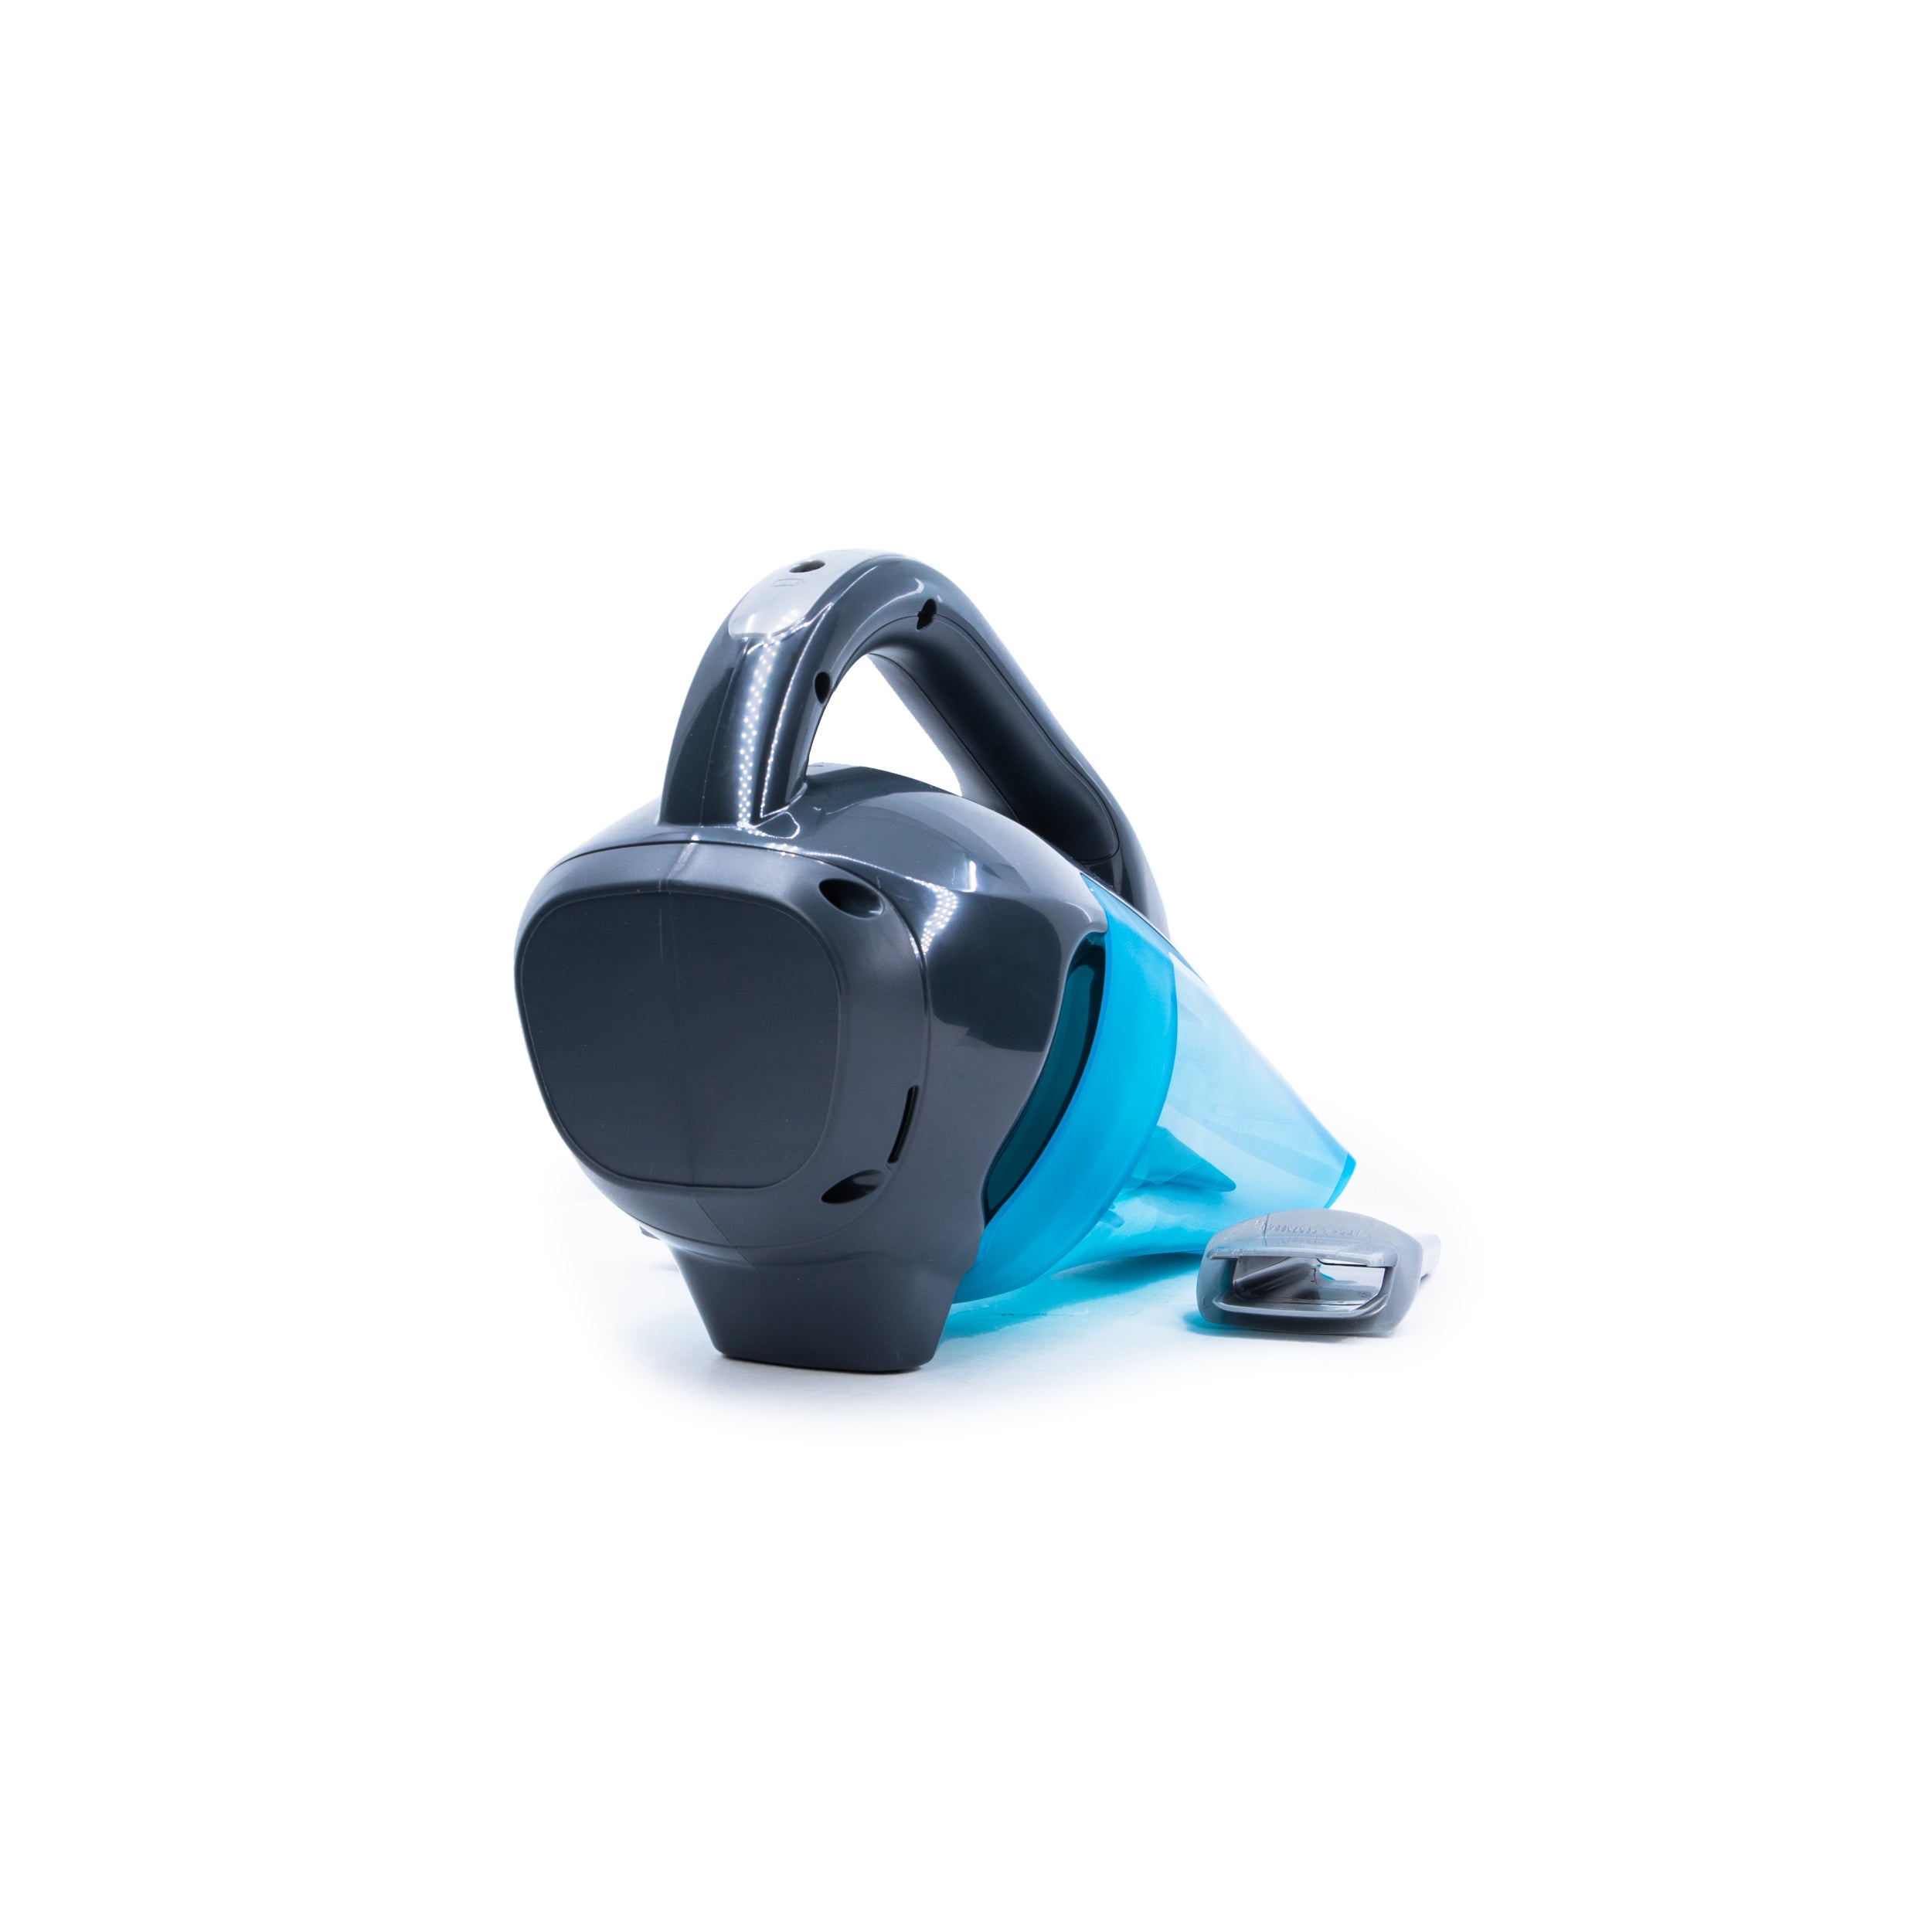 Dustbuster Advancedclean Cordless Wet/Dry Handheld Vacuum